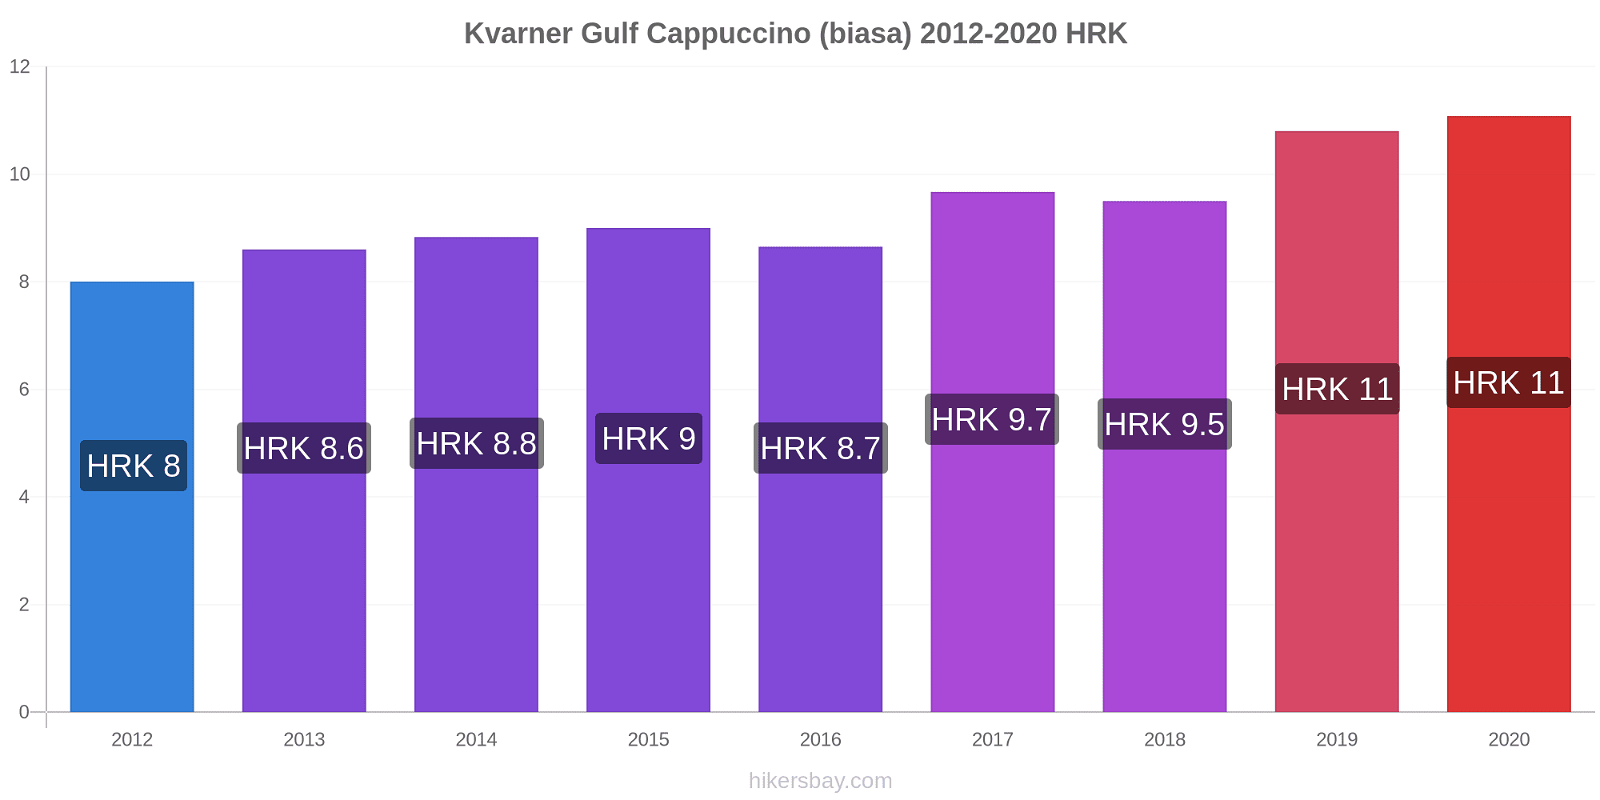 Kvarner Gulf perubahan harga Cappuccino (biasa) hikersbay.com